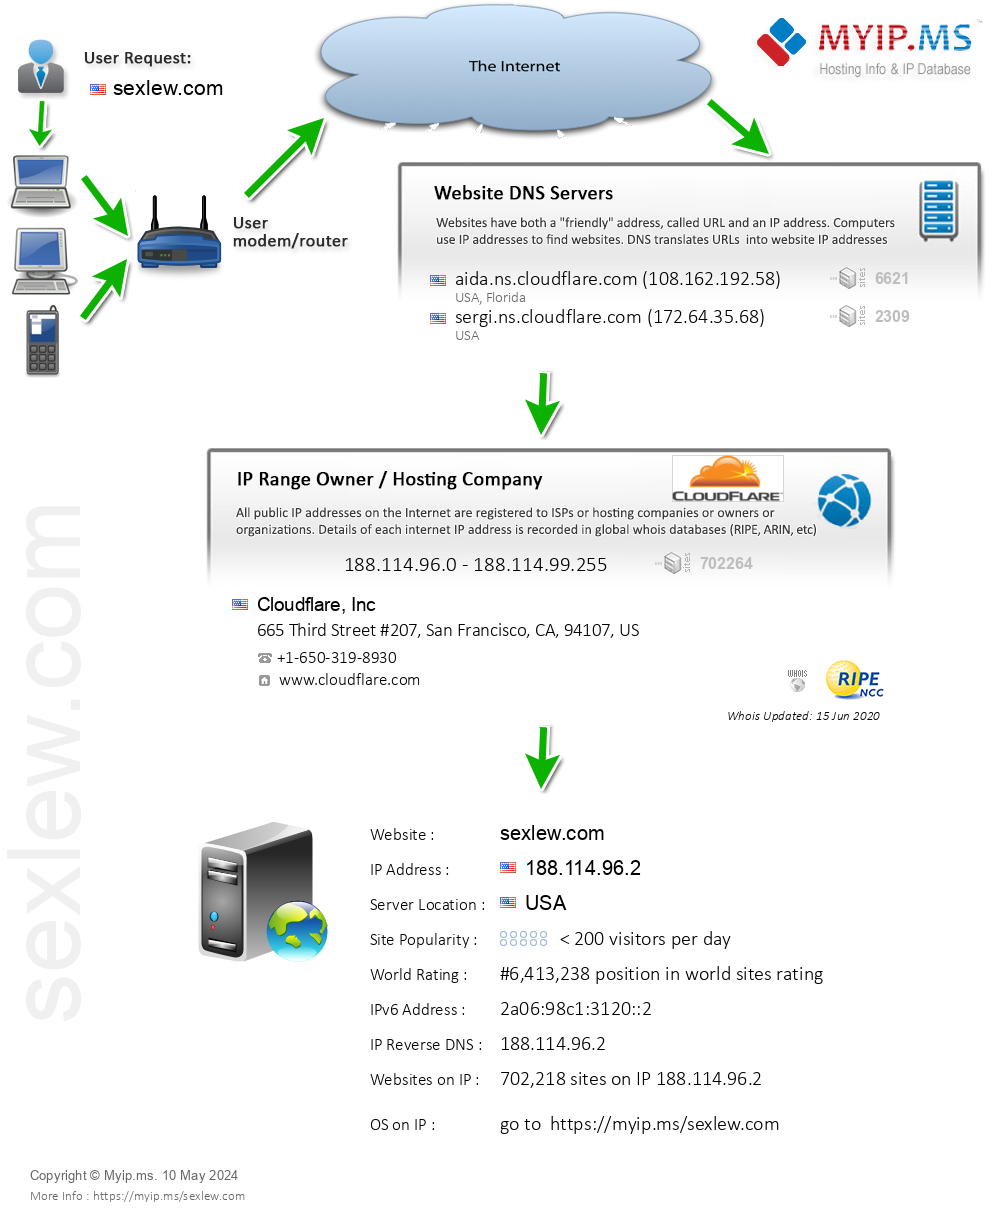 Sexlew.com - Website Hosting Visual IP Diagram